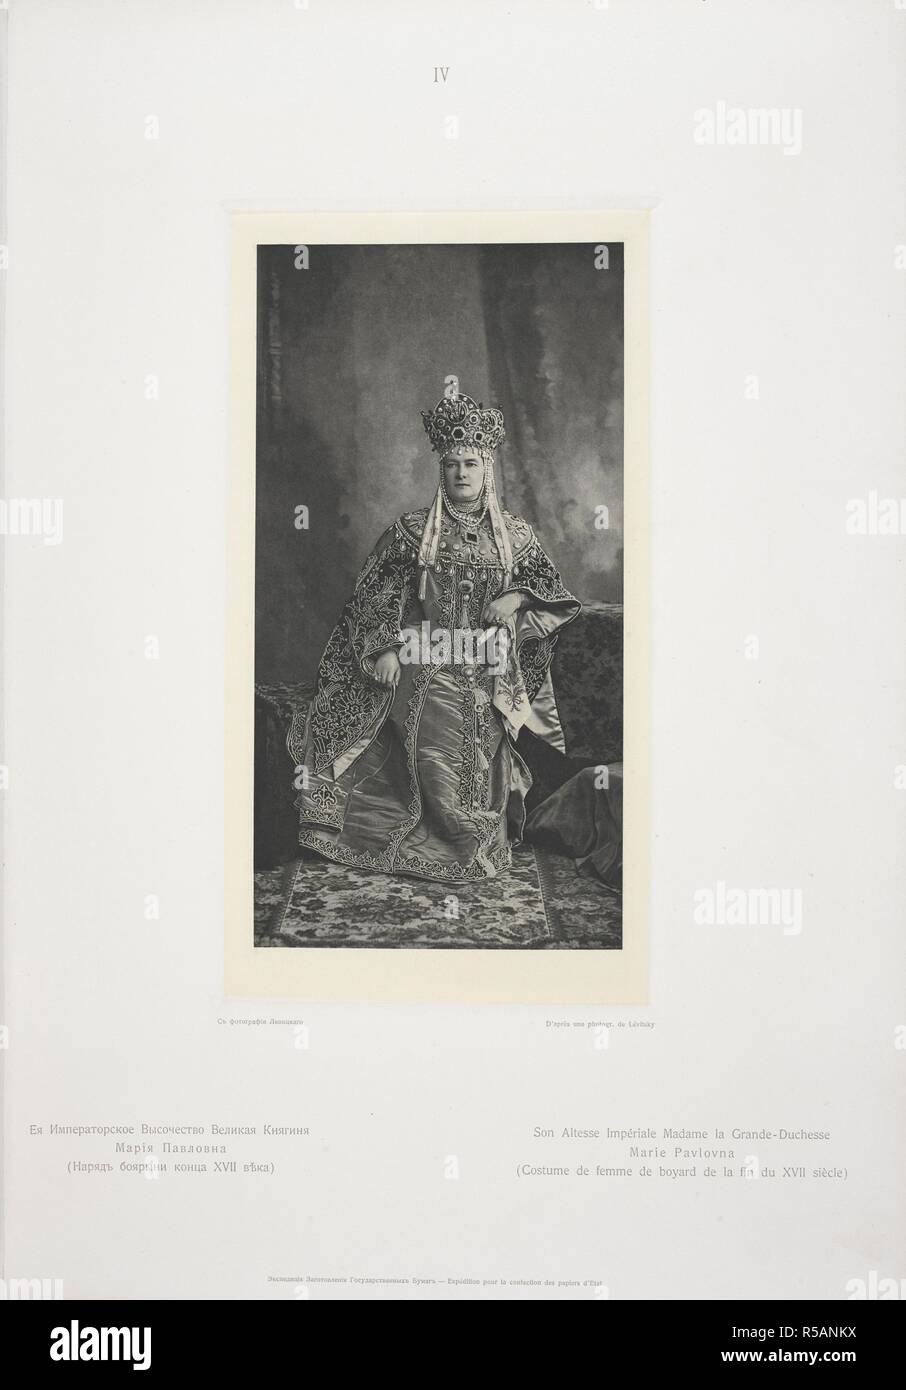 Son Altesse impÃ©riale Madame la Grande-Duchesse Marie Pavlovna.  Duchess Marie of Mecklenburg-Schwerin (later Grand Duchess Maria Pavlovna of Russia, known as 'Miechen' or 'Maria Pavlovna the Elder'; 14 May 1854 â€“ 6 September 1920)  The Grand Duchess held the distinction to be the last of the Romanovs to escape Revolutionary Russia. ÐÐ»ÑŒÐ±Ð¾Ð¼ÑŠ ÐºÐ¾ÑÑ‚ÑŽÐ¼Ð¸Ñ€Ð¾Ð²Ð°Ð½Ð½Ð°Ð³Ð¾ Ð±Ð°Ð»Ð° Ð²ÑŠ Ð—Ð¸Ð¼Ð½ÐµÐ¼ÑŠ Ð”Ð²Ð¾Ñ€Ñ†Ñ£ Ð²ÑŠ Ñ„ÐµÐ²Ñ€Ð°Ð»Ñ£ 1903 Ð³. = Album du bal costumeÌ au Palais d'hiver : feÌvrier 1903. S.-Peterburg : EÌ‡kspeditï¸ sï¸¡iÌ„iï¸ aï¸¡ zagotovleniÌ„iï¸ aï¸¡ gos. bumag, 1904 Stock Photo